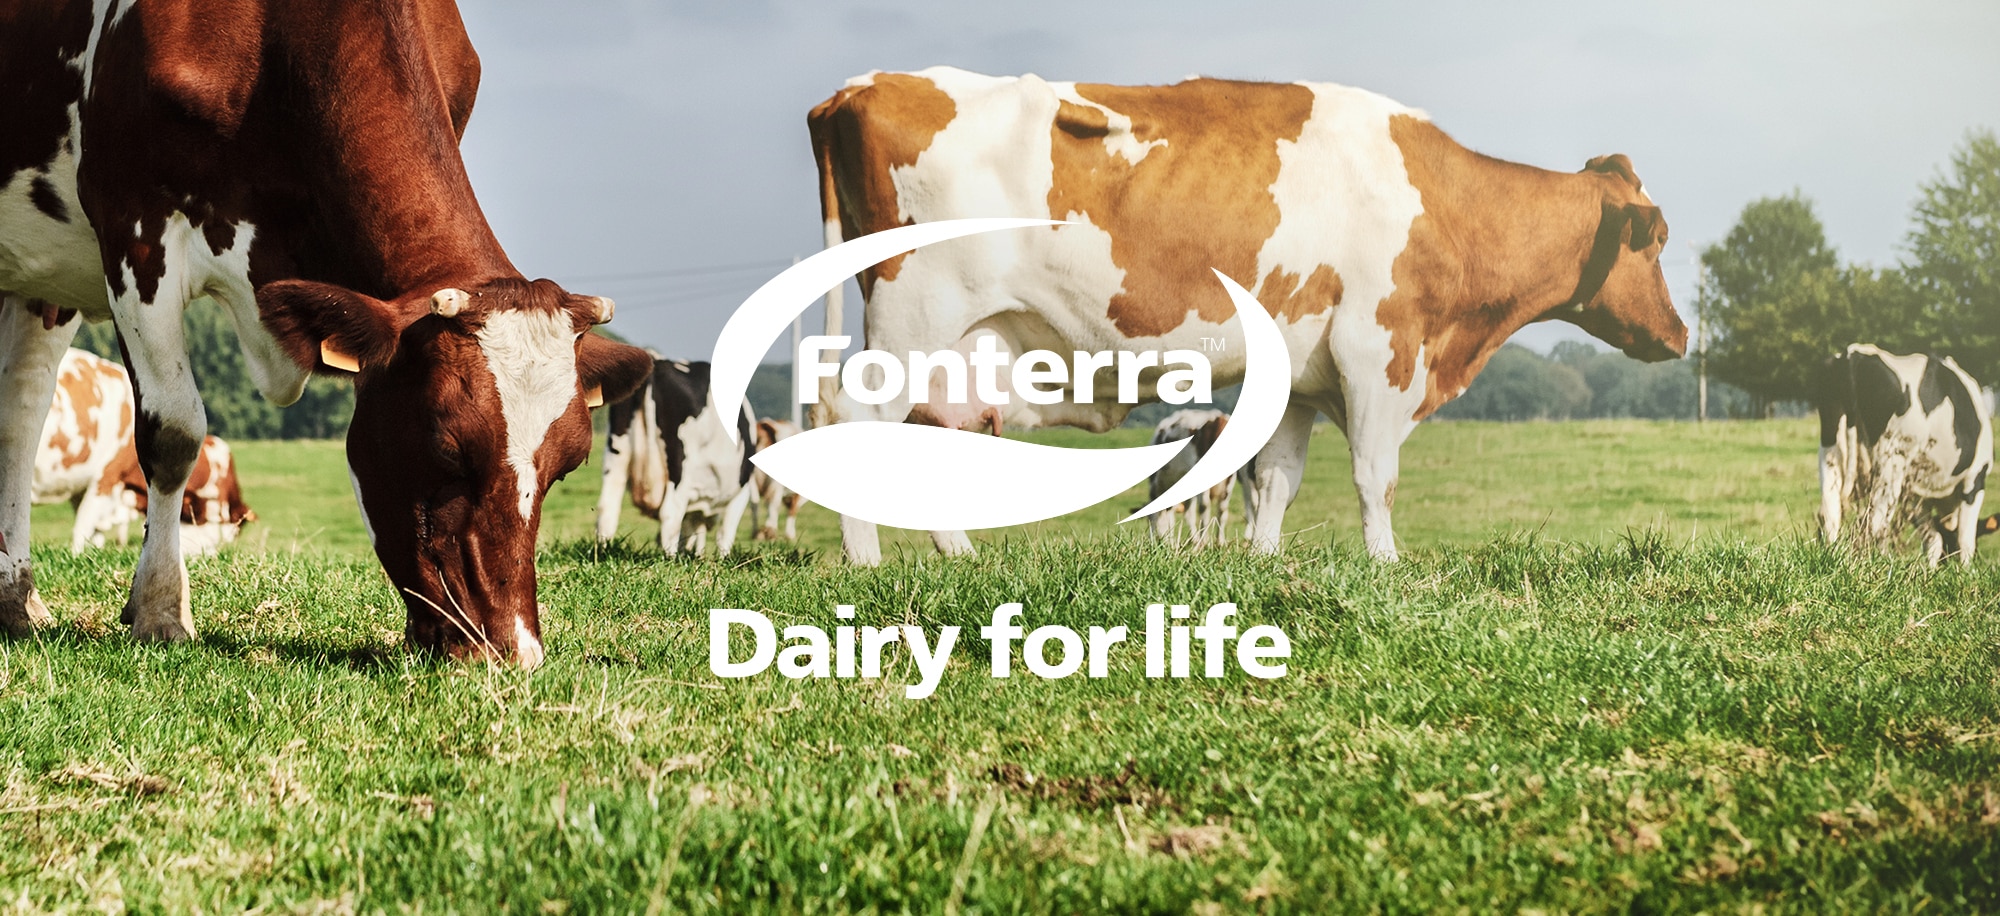 Farming for insights at Fonterra